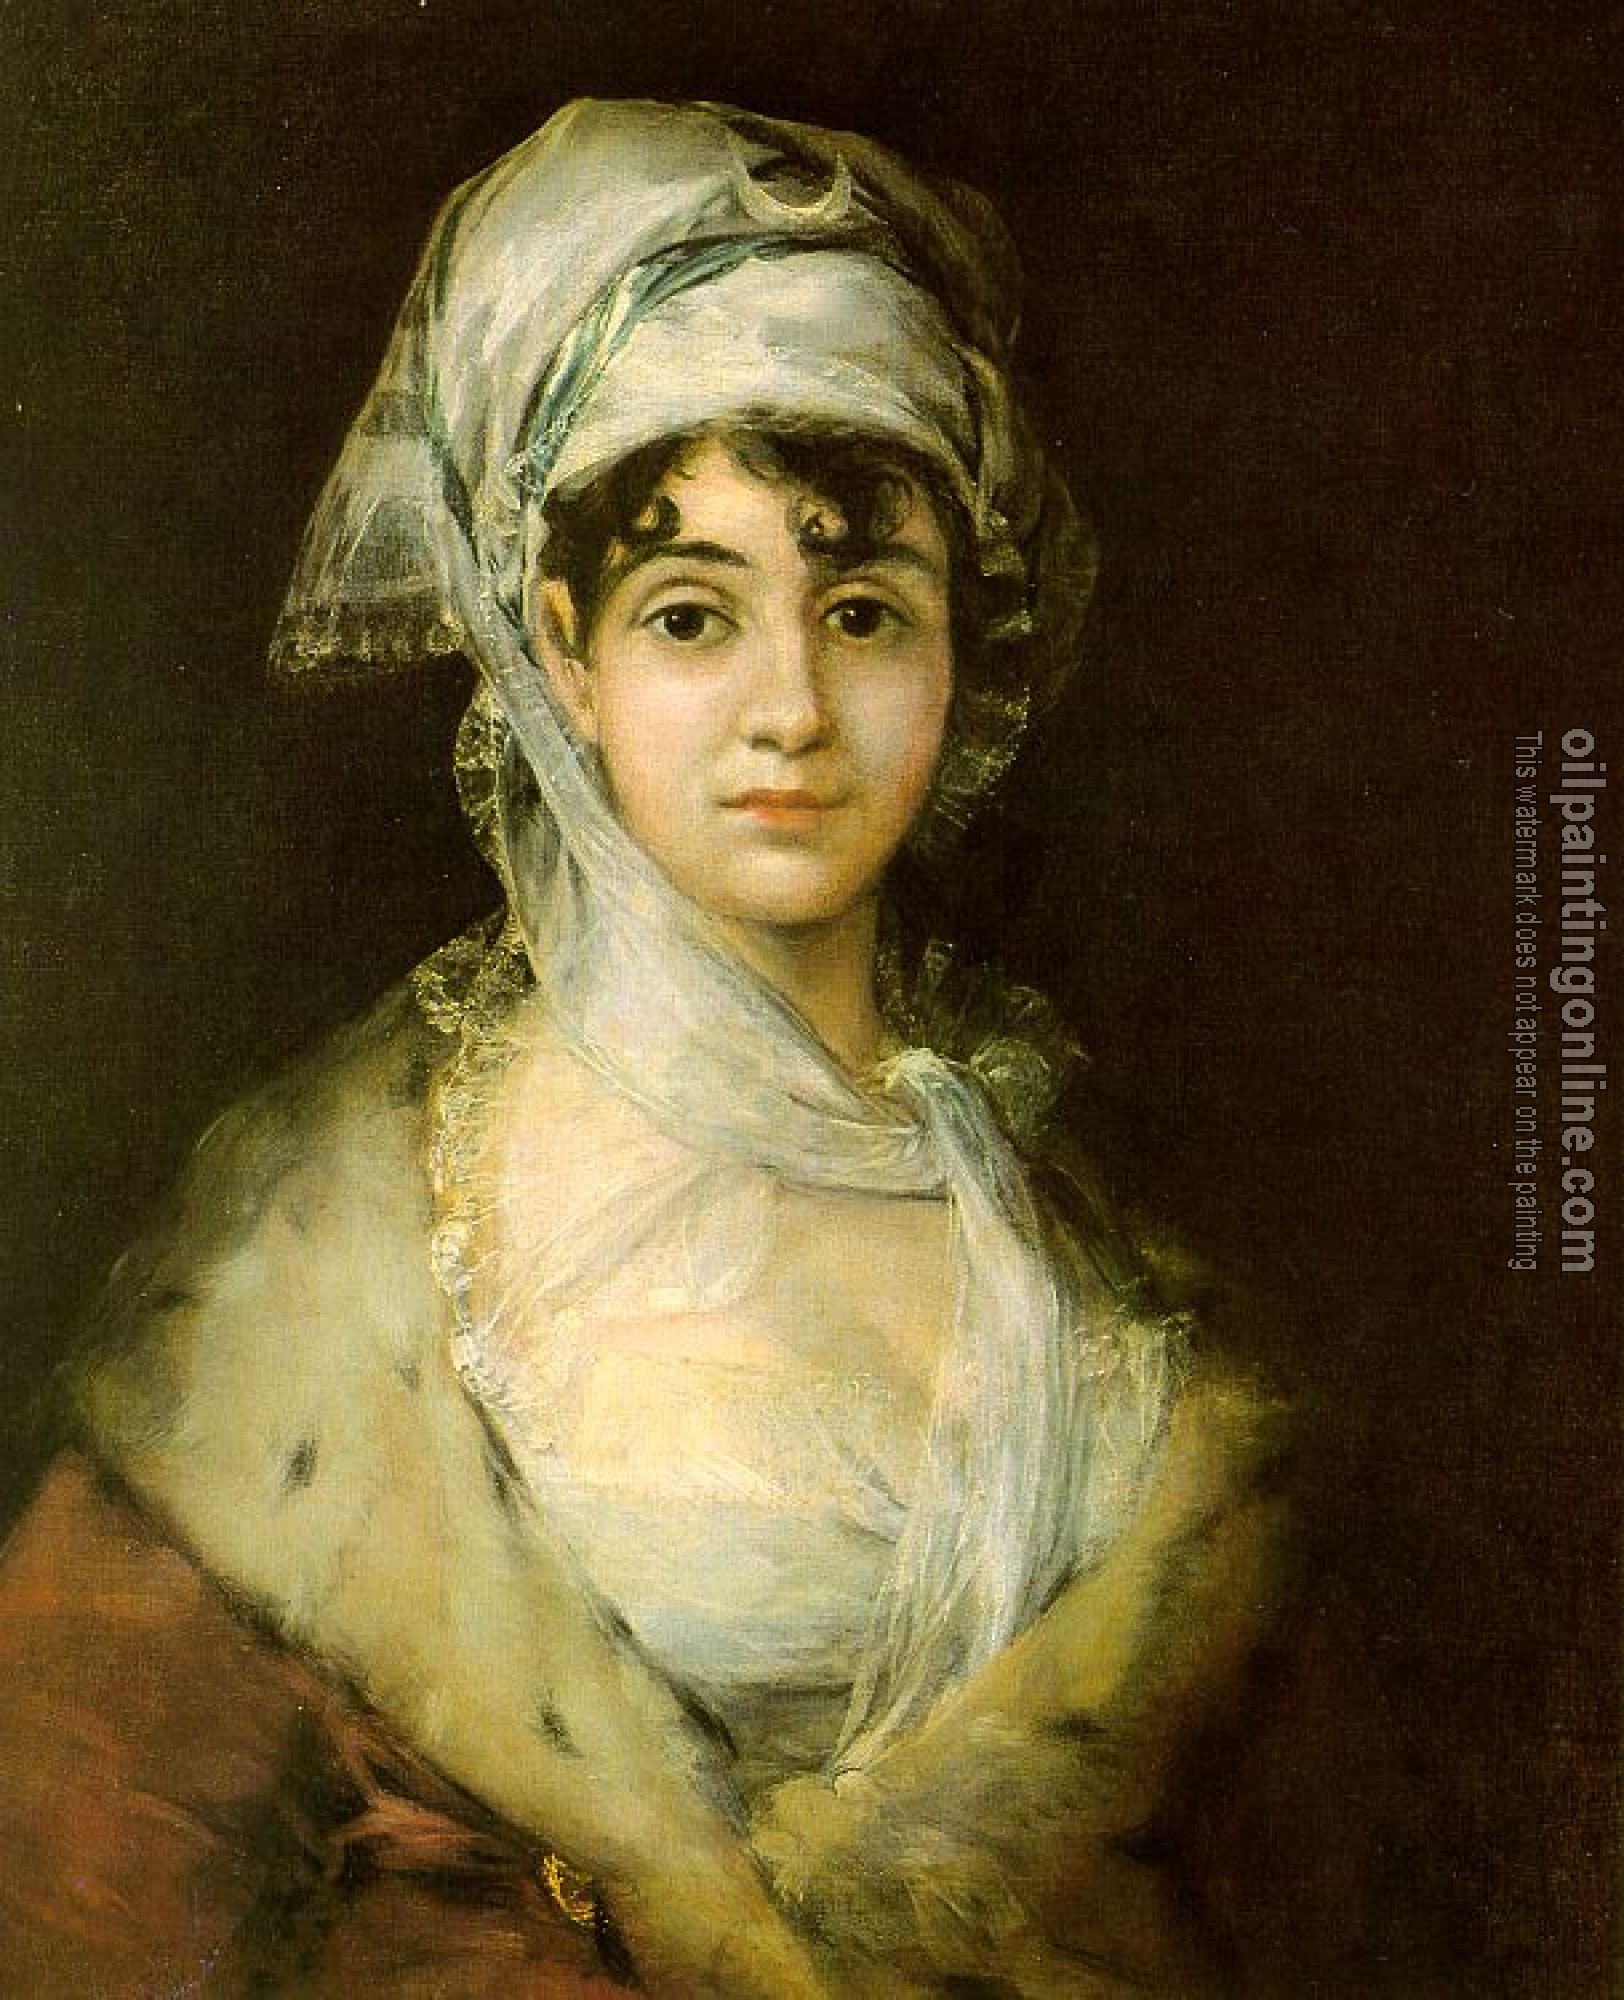 Goya, Francisco de - Antonia Zarate